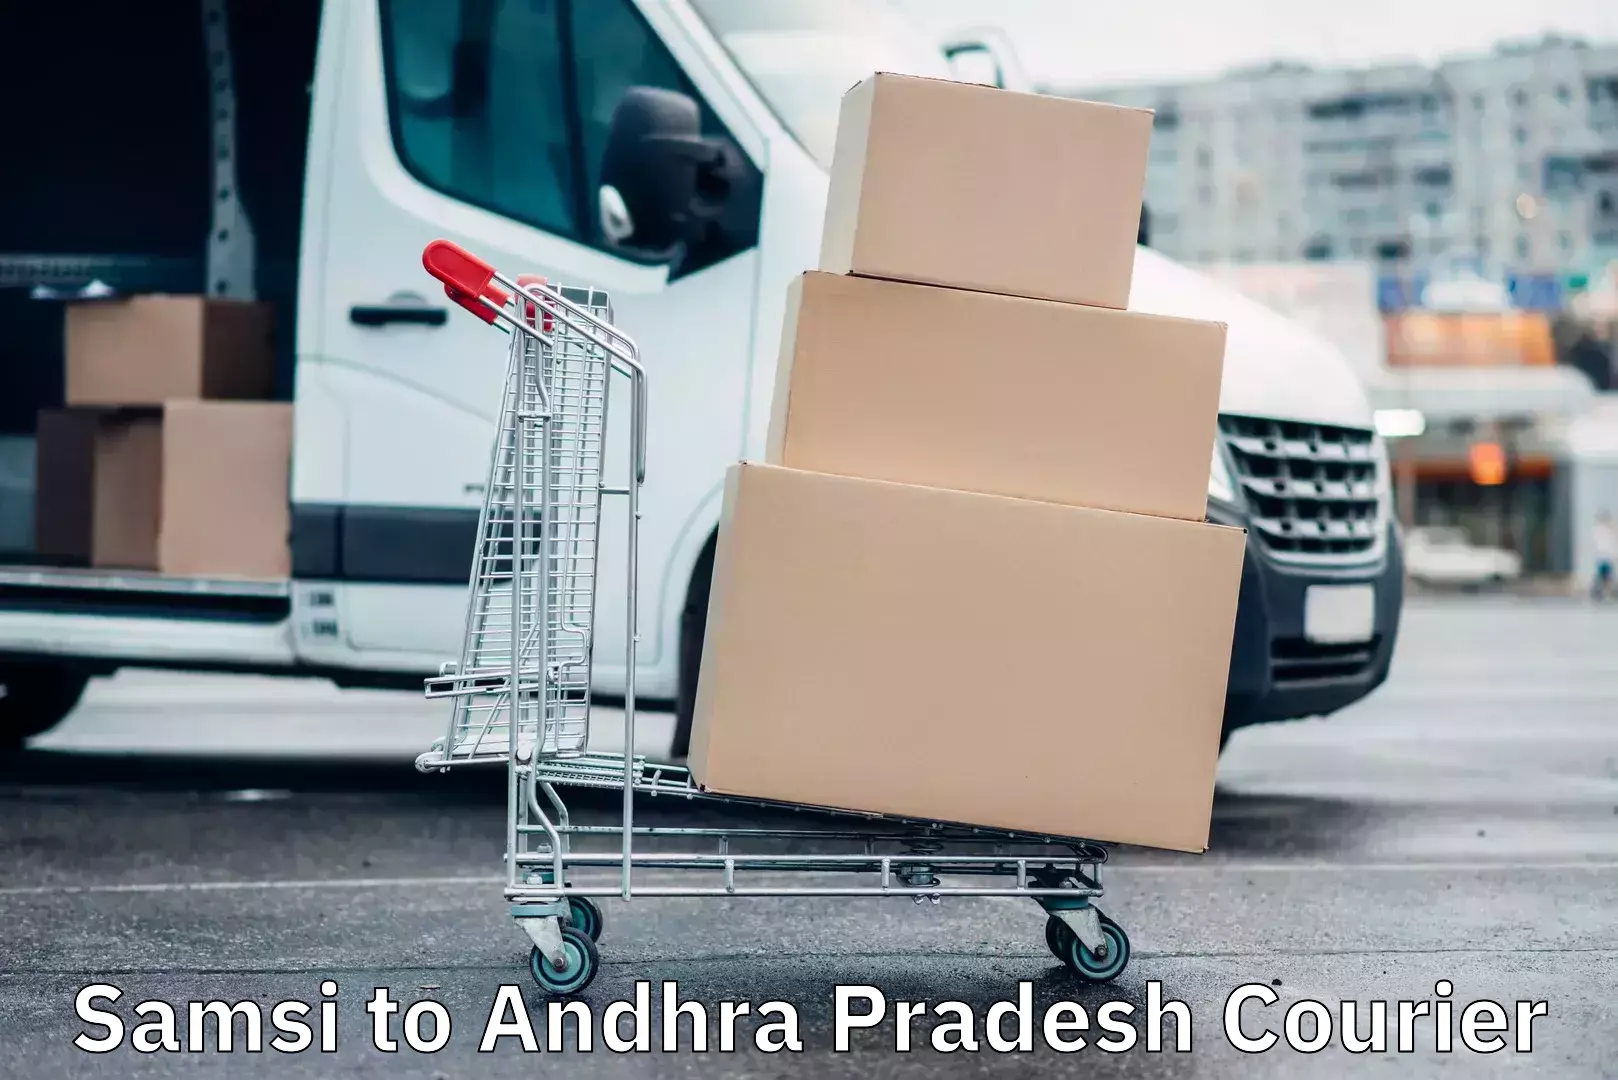 Nationwide delivery network Samsi to Andhra Pradesh